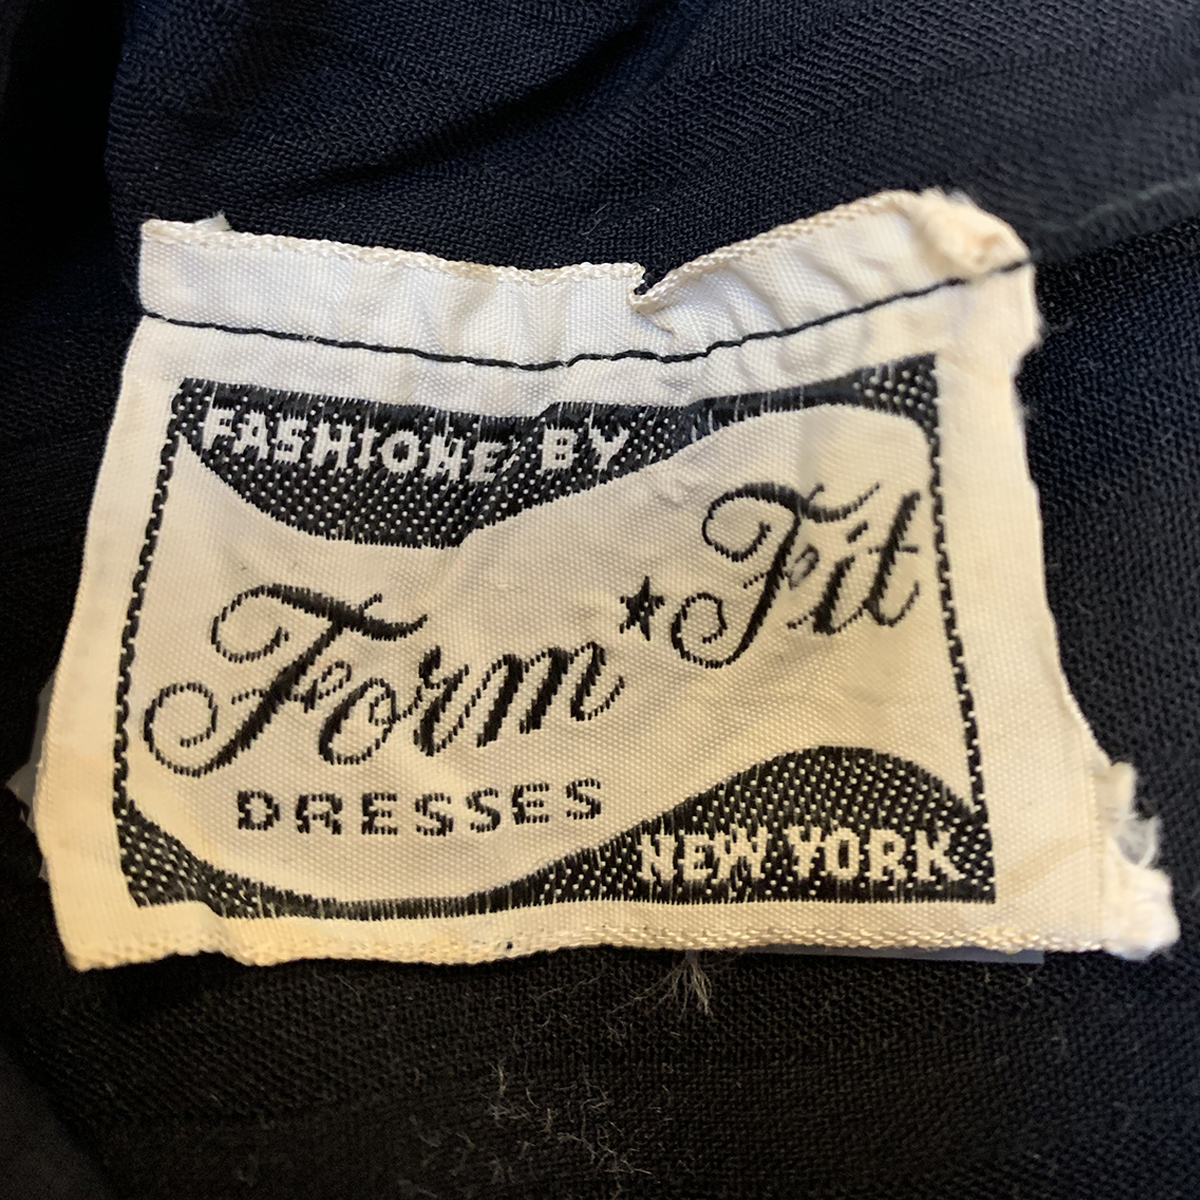 1940s Form fit dress